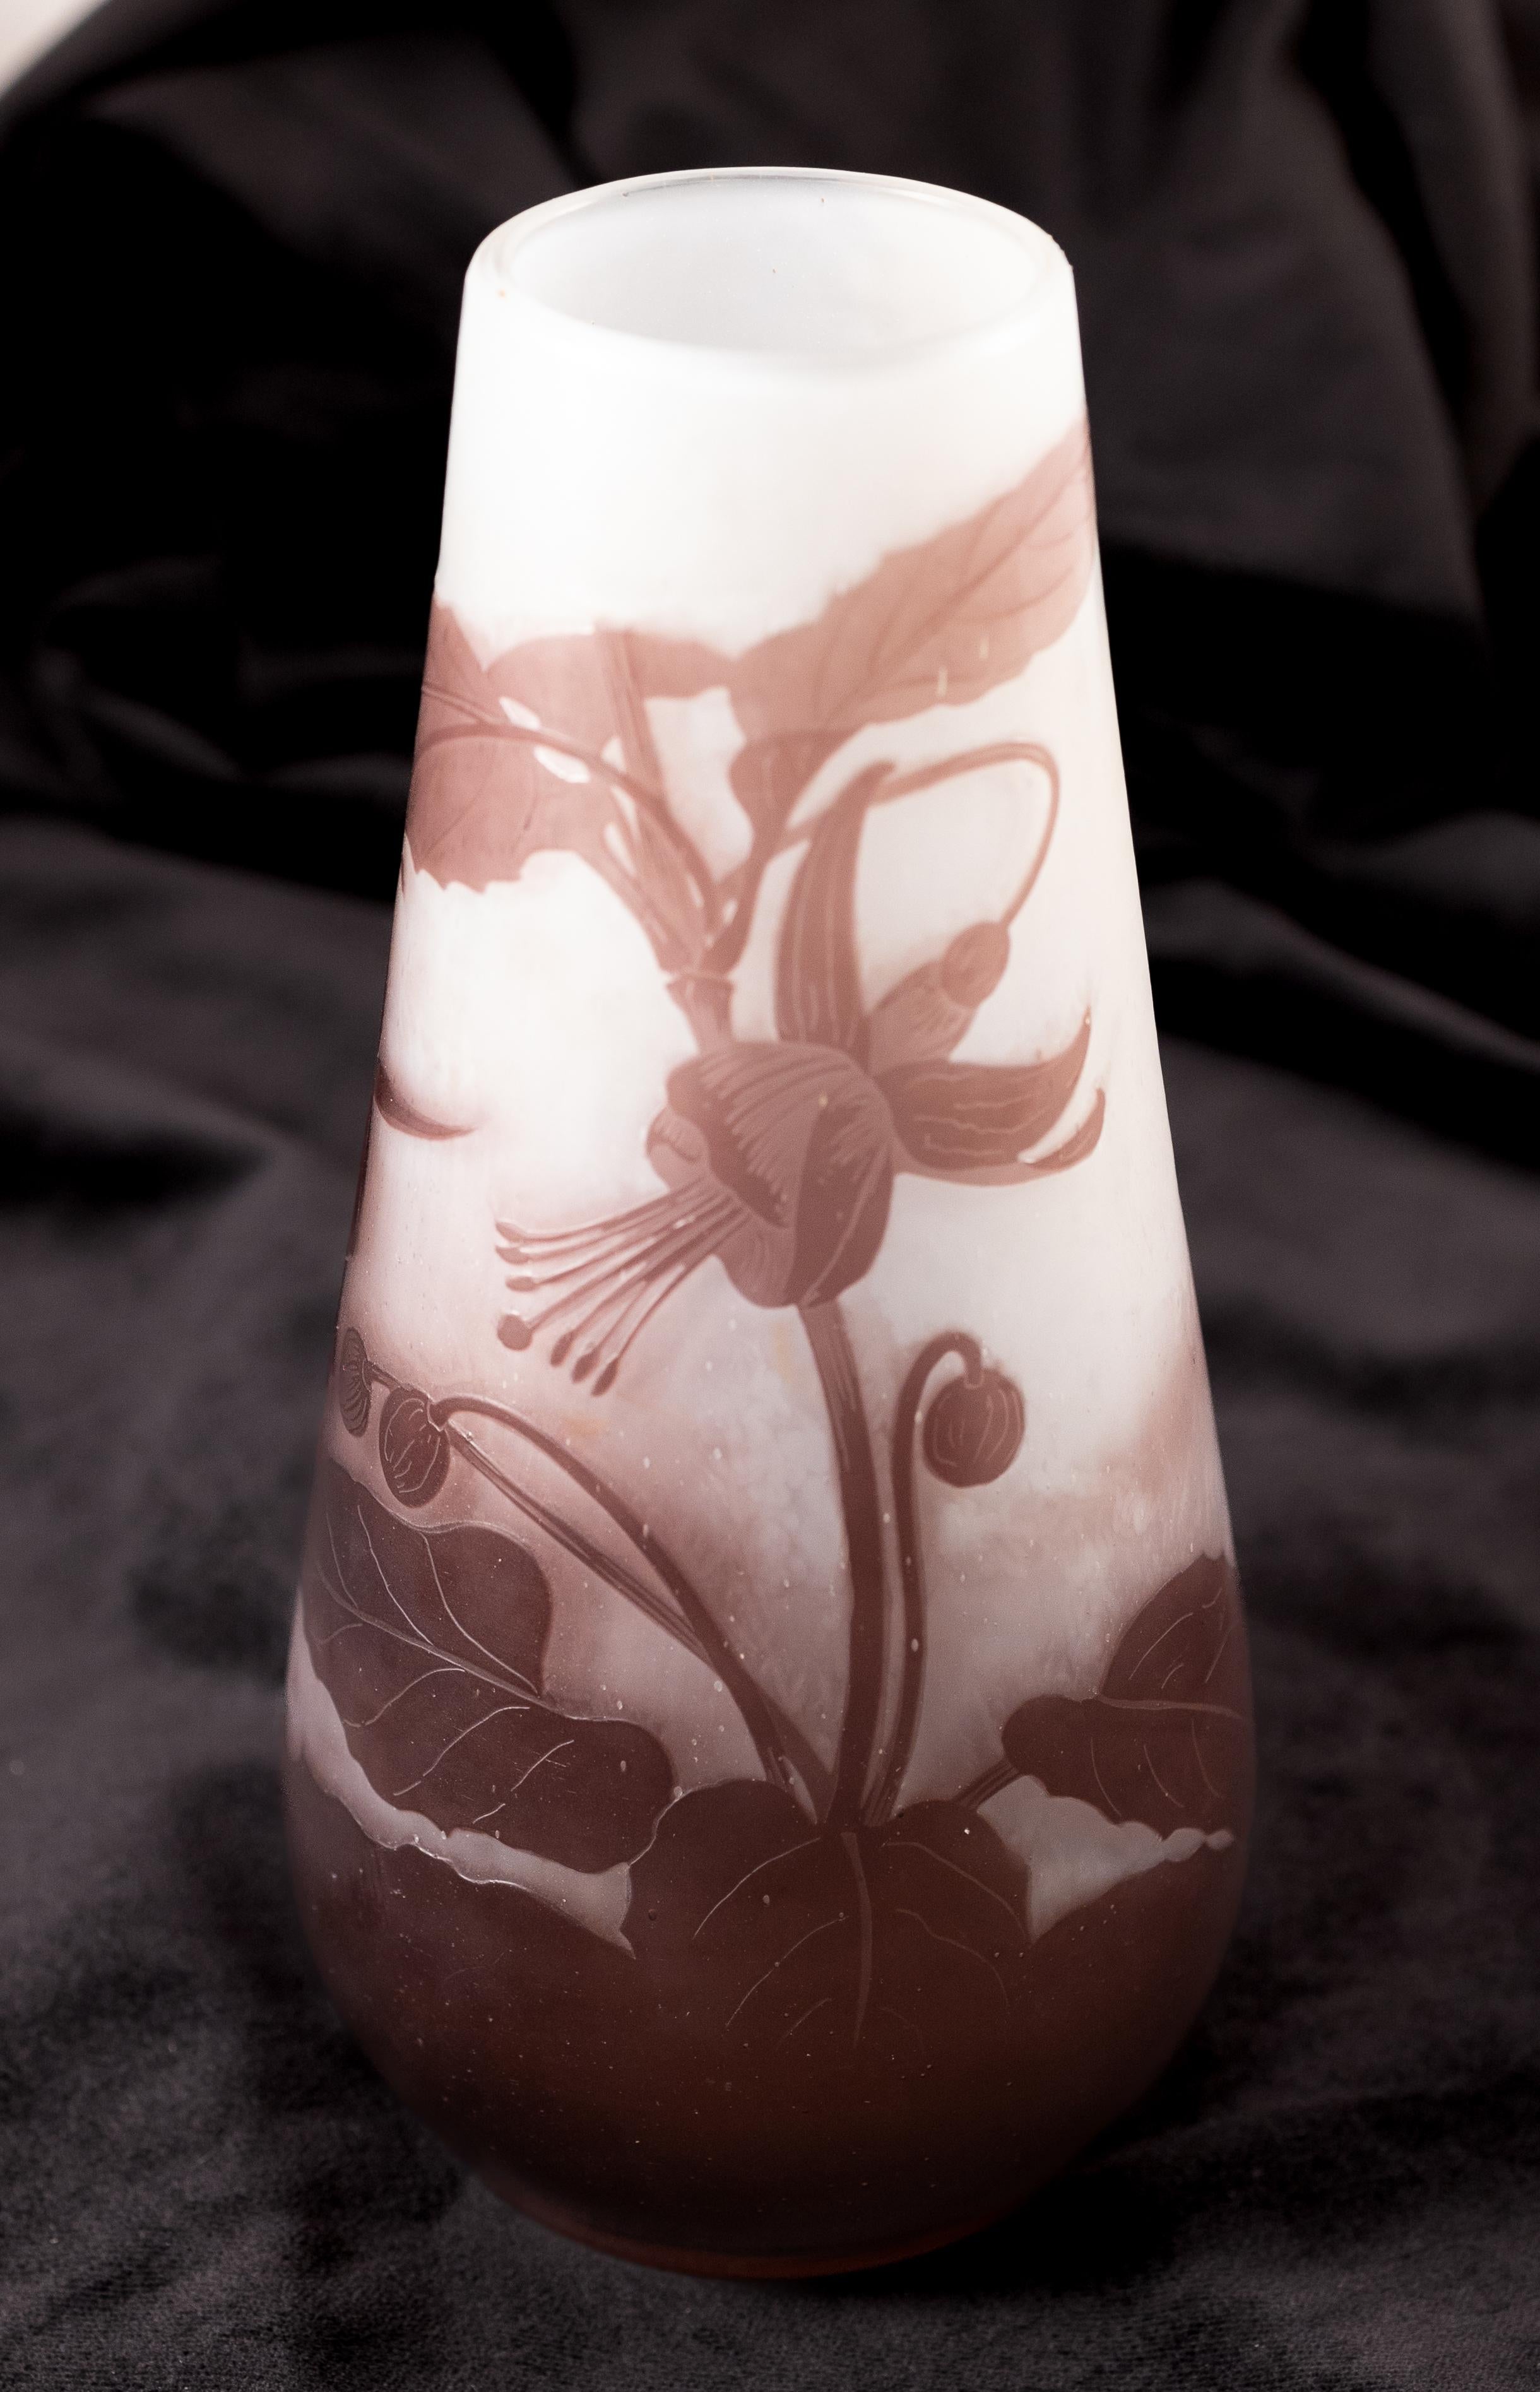 Émile Gallé  (French, 1846 - 1904)
Title:                       Art Nouveau Glass Vase Fuschias
Medium:                           Cameo Glass Vase
Size:        
Height                         8.5 inches
Diameter at Base             3.5